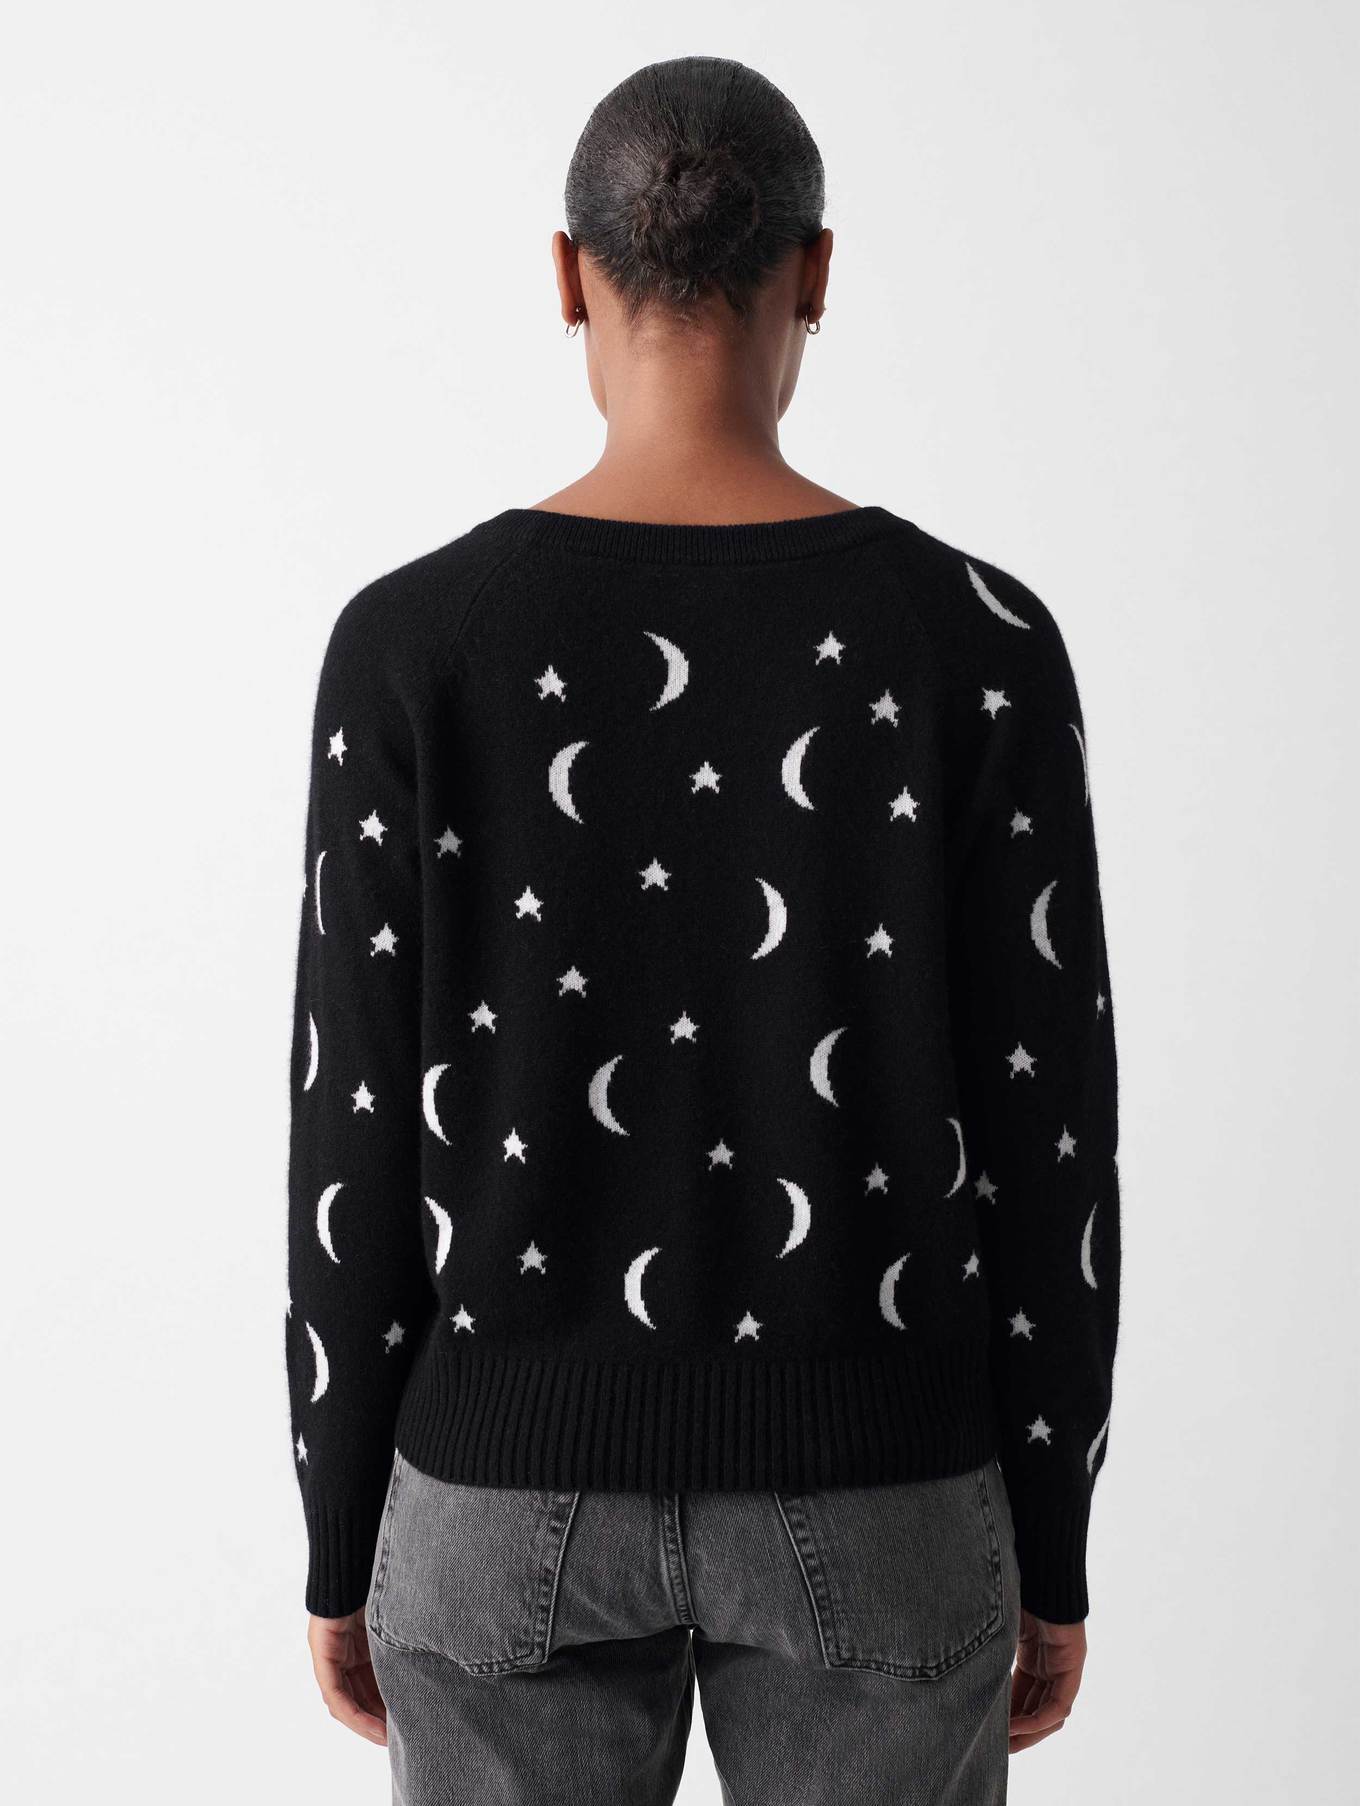 Cashmere New Moon Intarsia Sweatshirt in Black/Soft White